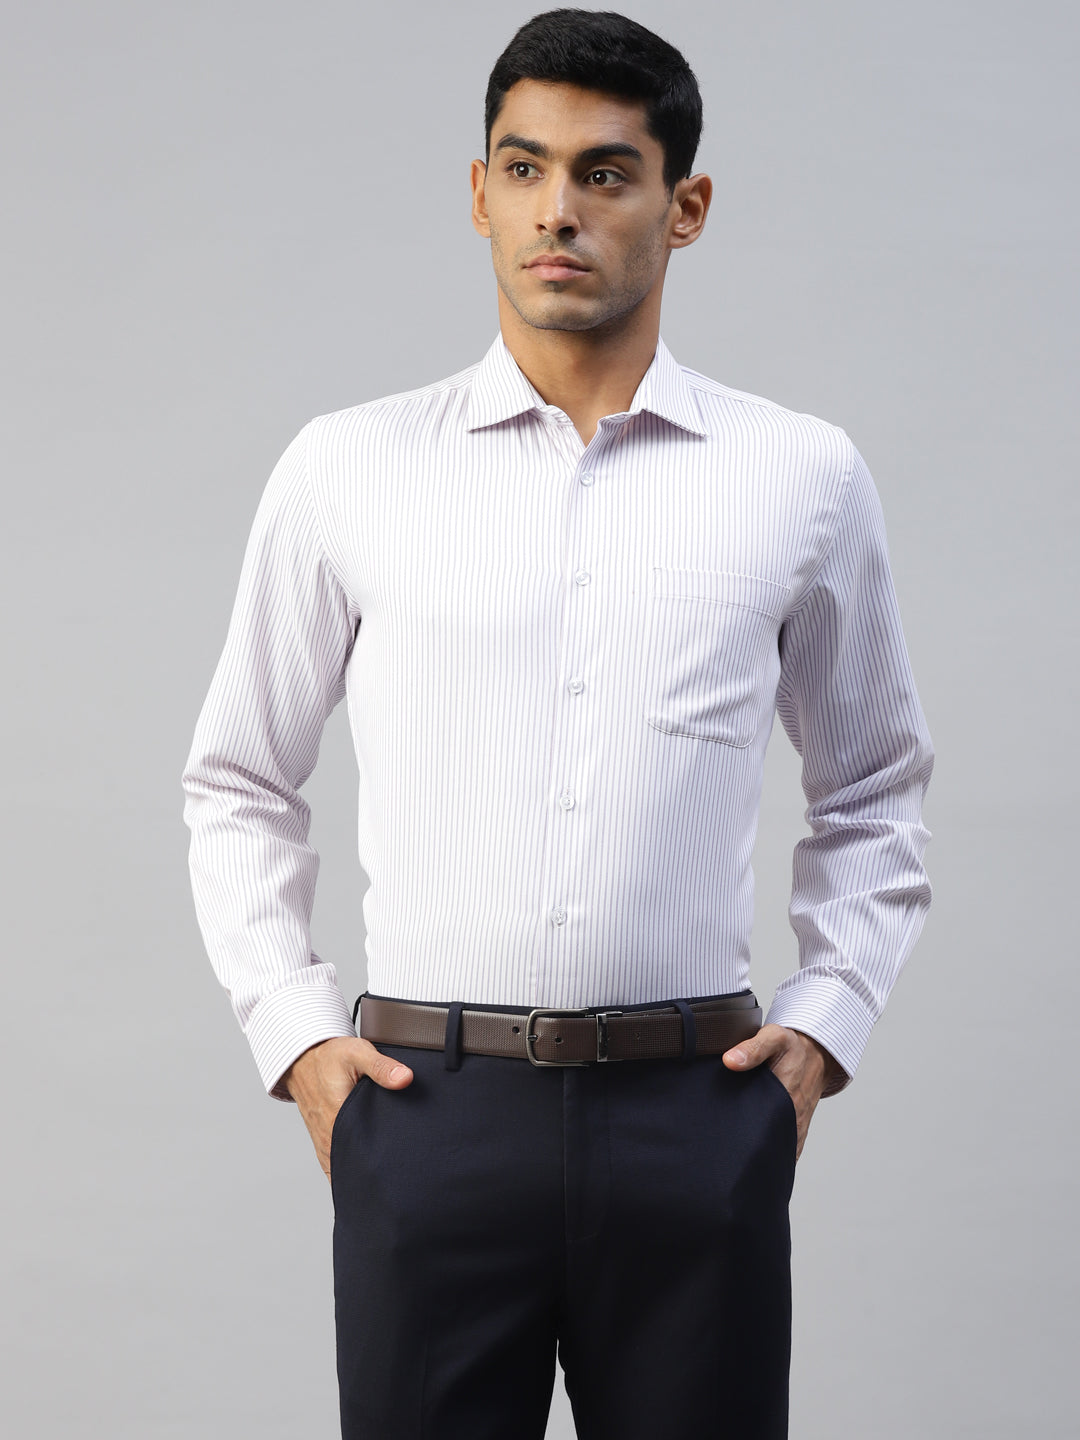 Don Vino Men's Lavender Stripes Formal Slim Fit Shirt